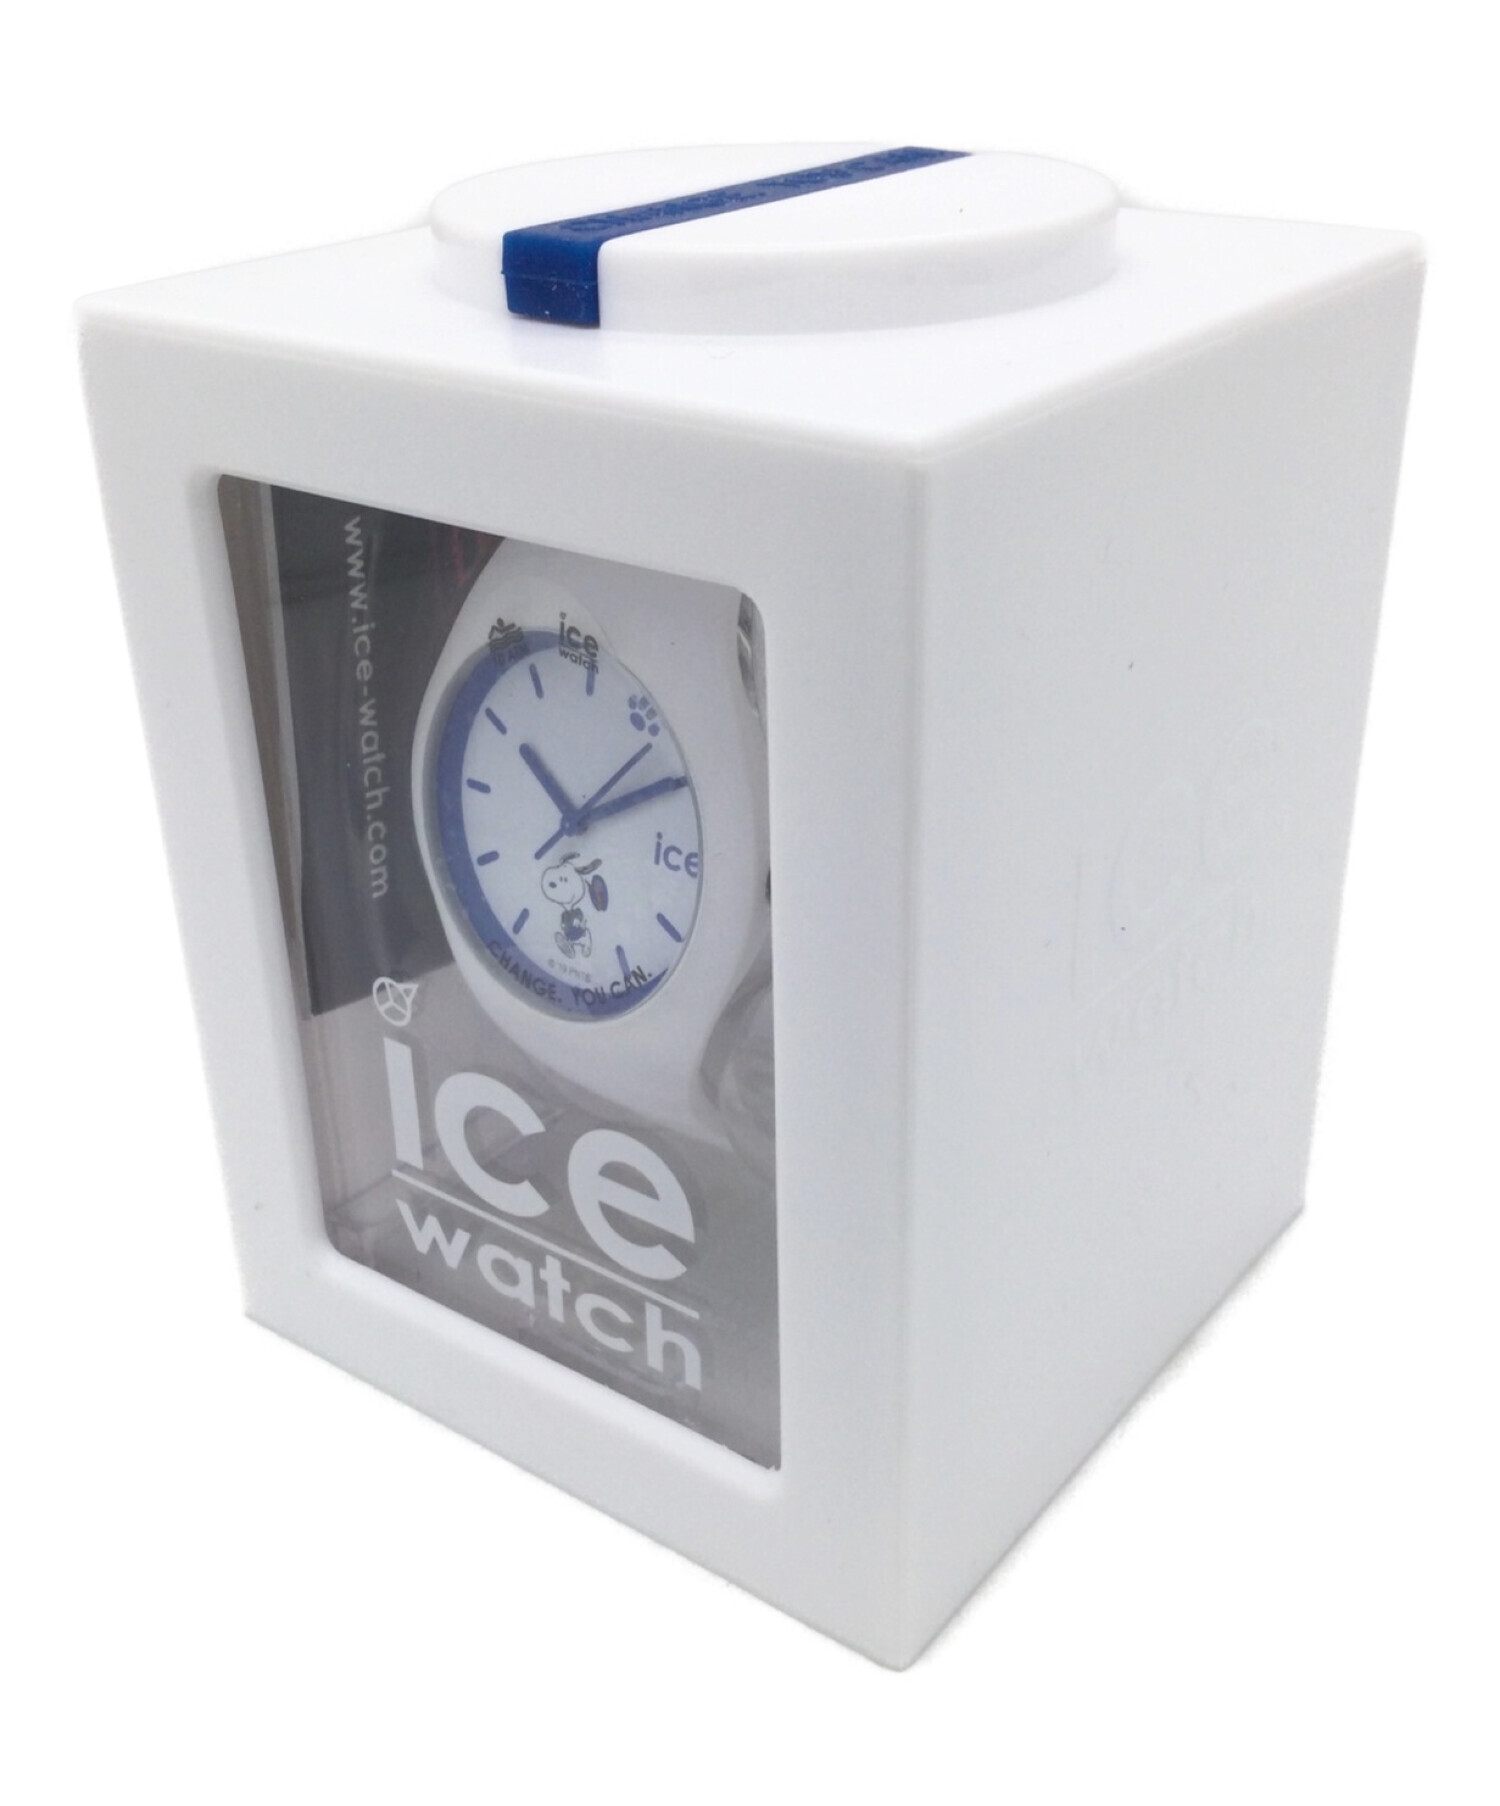 ice watch (アイスウォッチ) SNOOPY (スヌーピー) SNOOPY in 銀座 2019 サイズ:40mm 未使用品